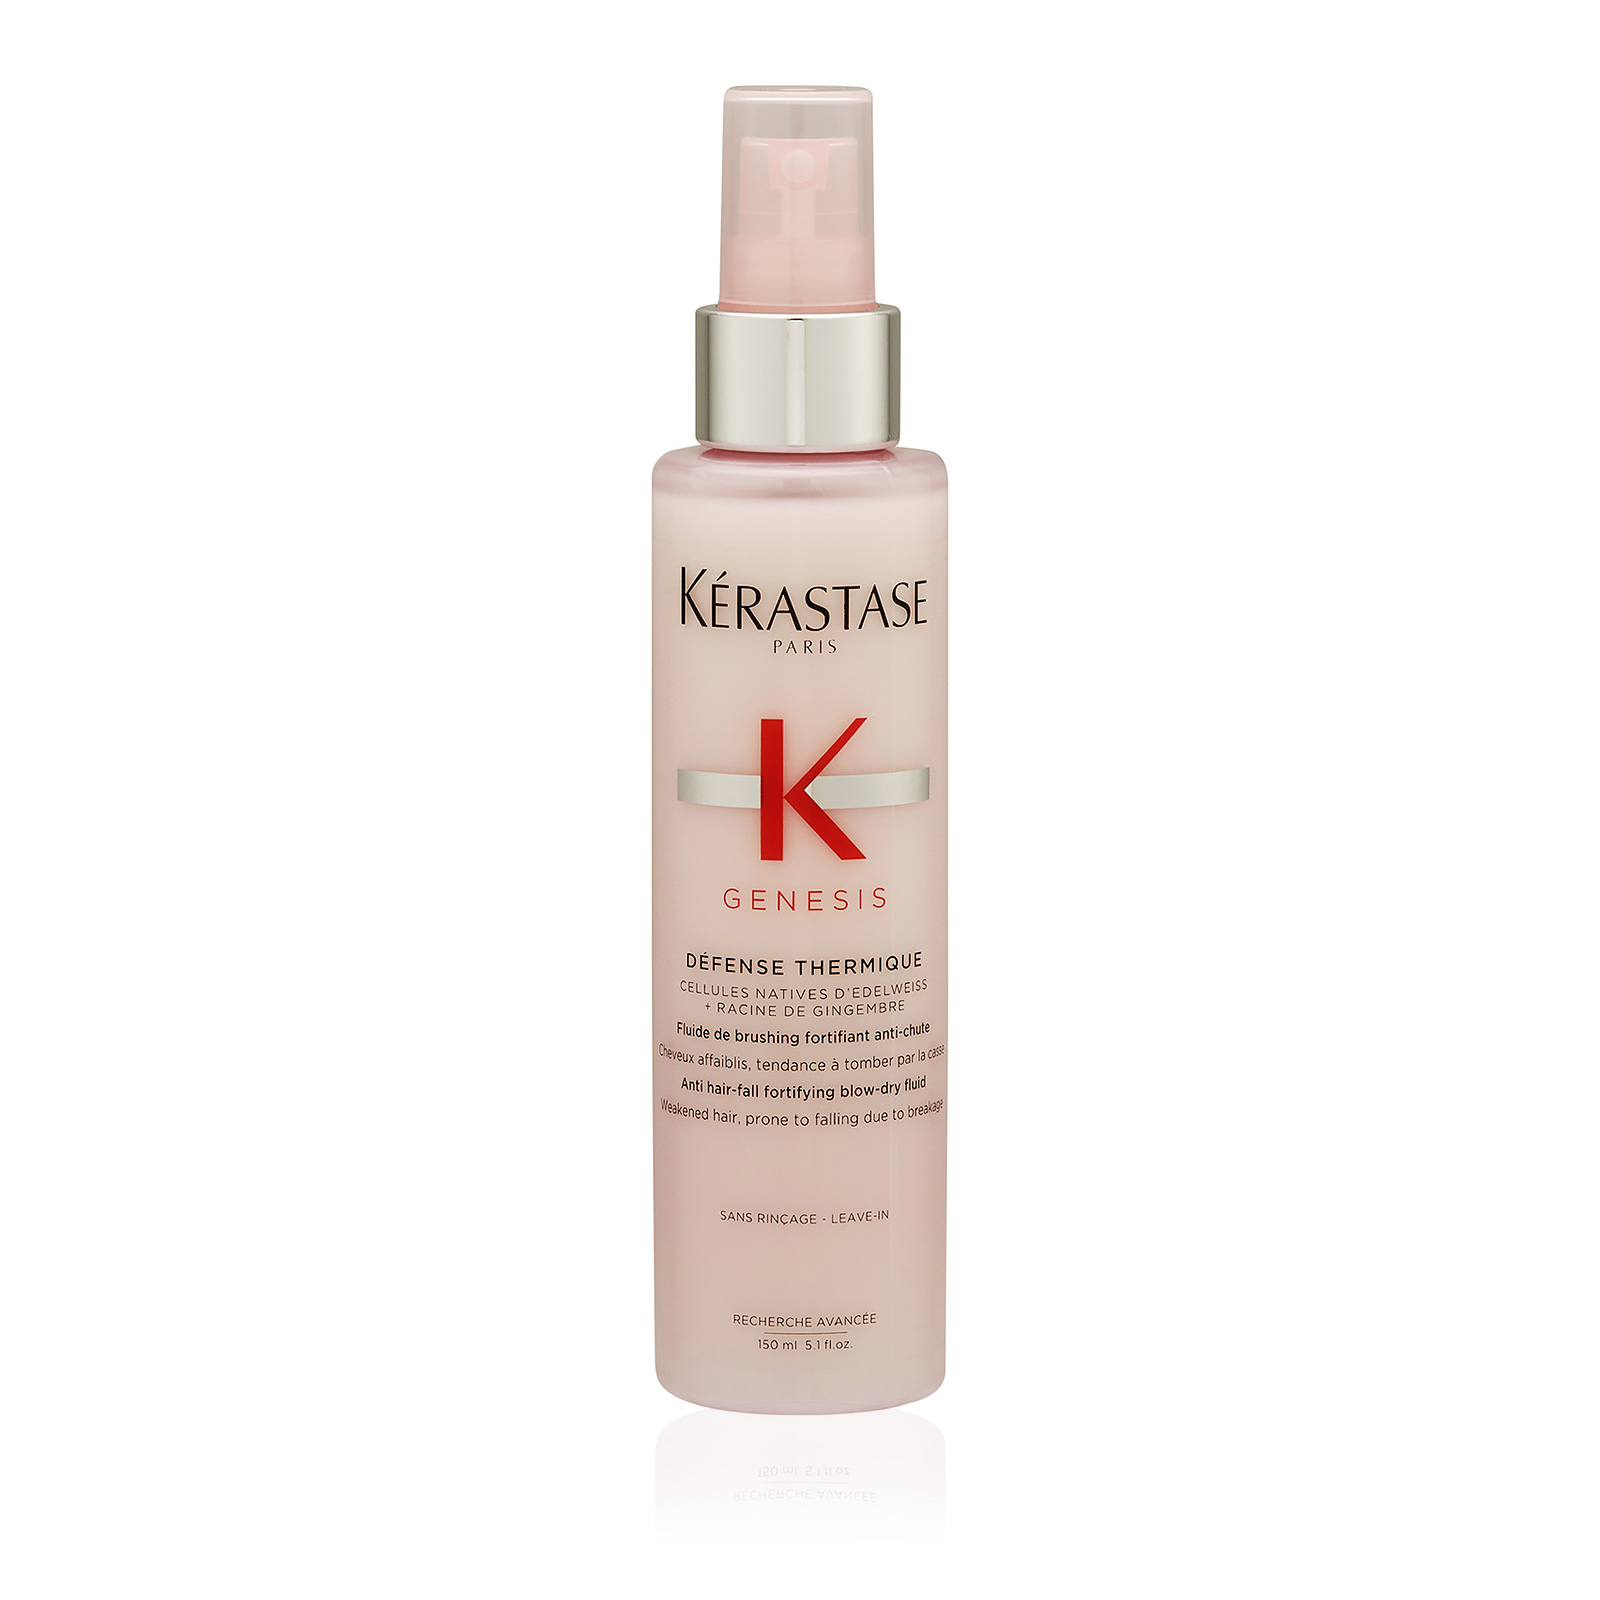 Kérastase Paris Kerastase Genesis Defense Thermique Anti Hair-Fall  Fortifying Blow-Dry Fluid150 ml  oz AKB Beauty